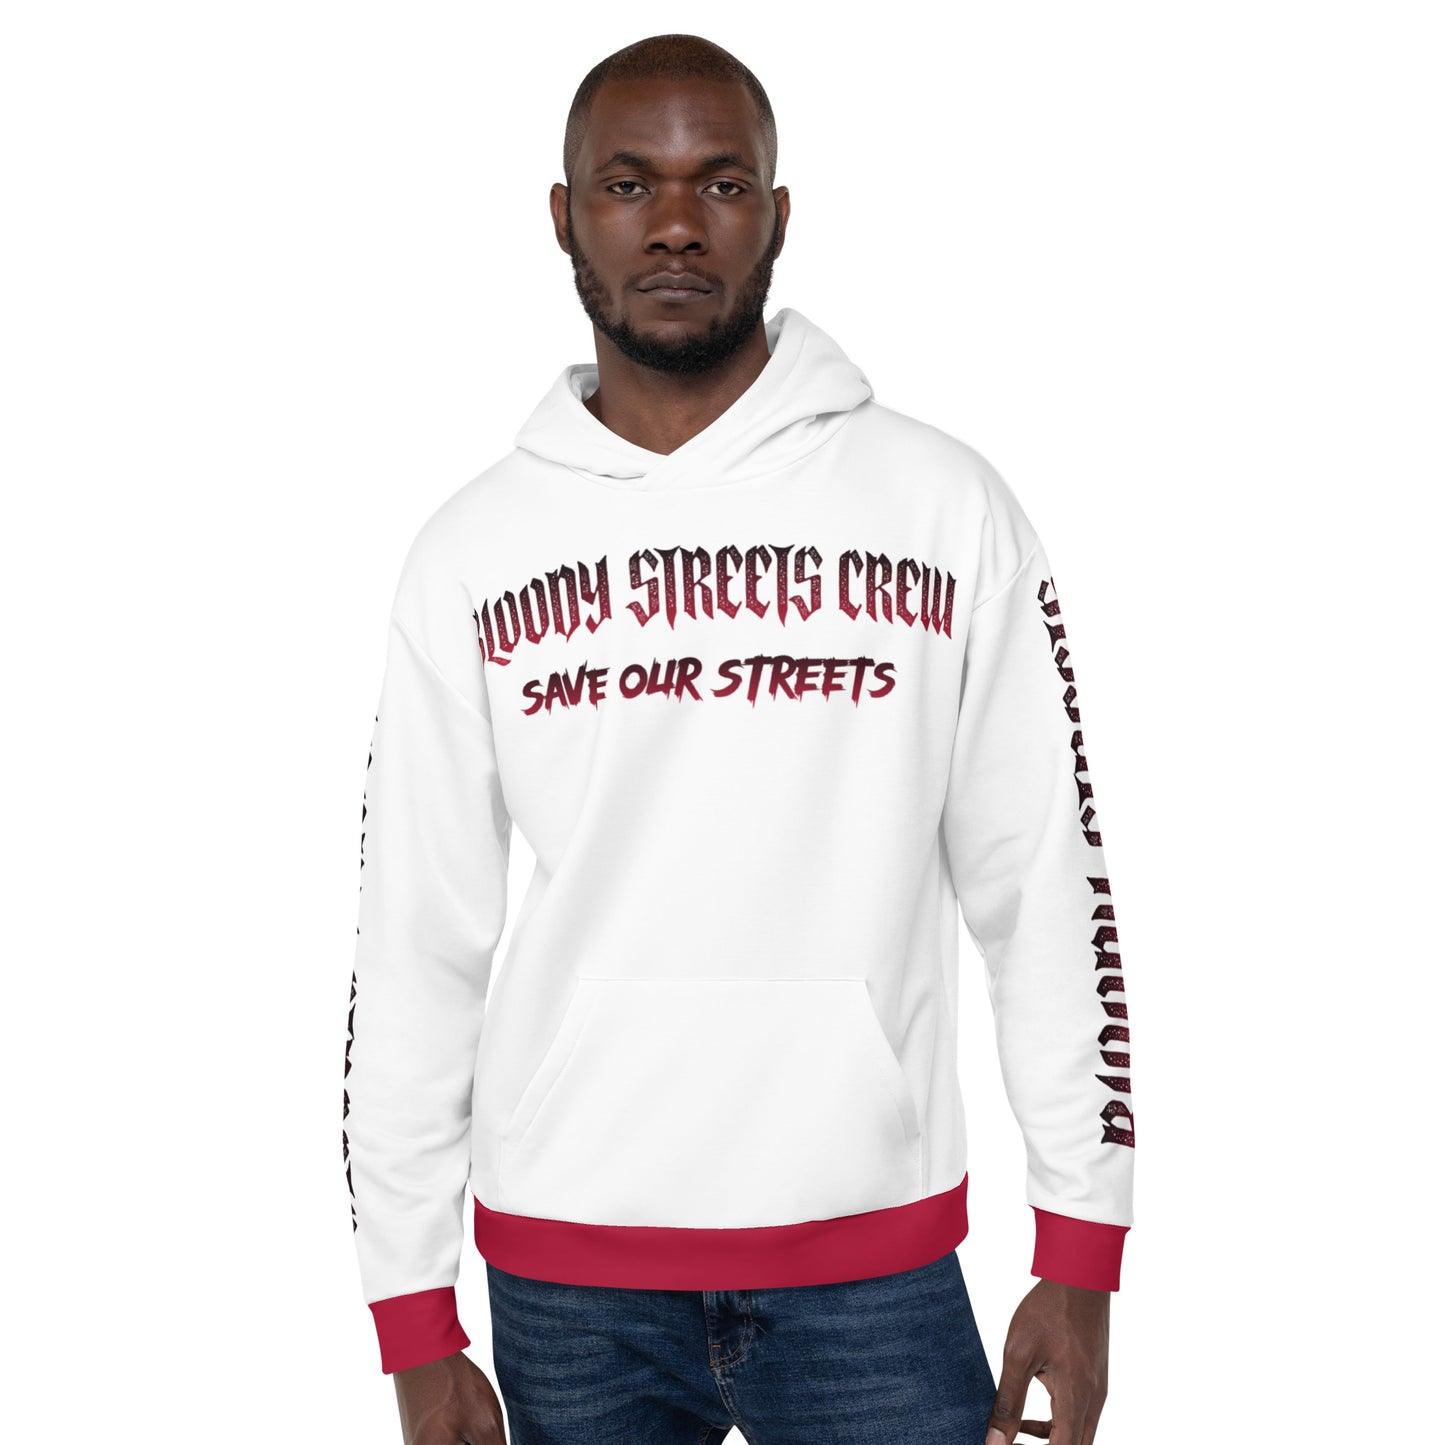 Bloody Streets Crew Streetwear Hoodie White - BLOODY-STREETS.DE Streetwear Herren und Damen Hoodies, T-Shirts, Pullis